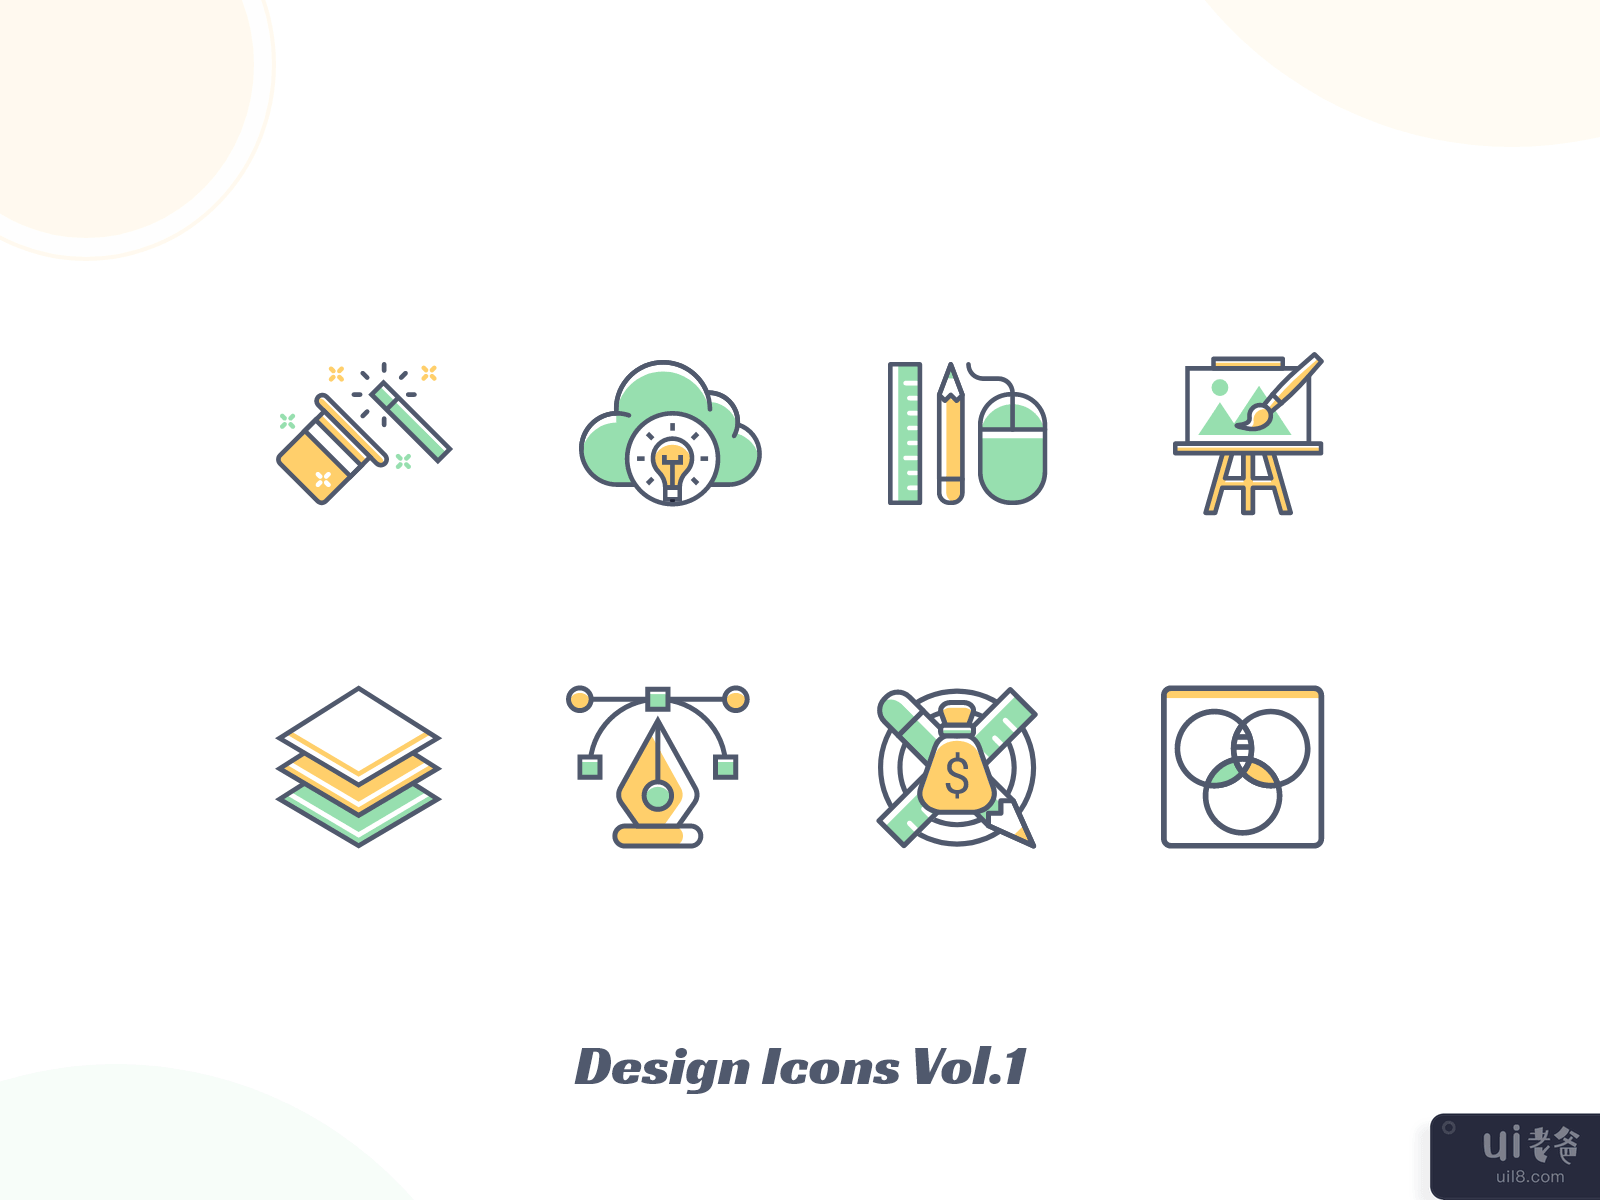 设计图标 Vol.1(Design Icons Vol.1)插图